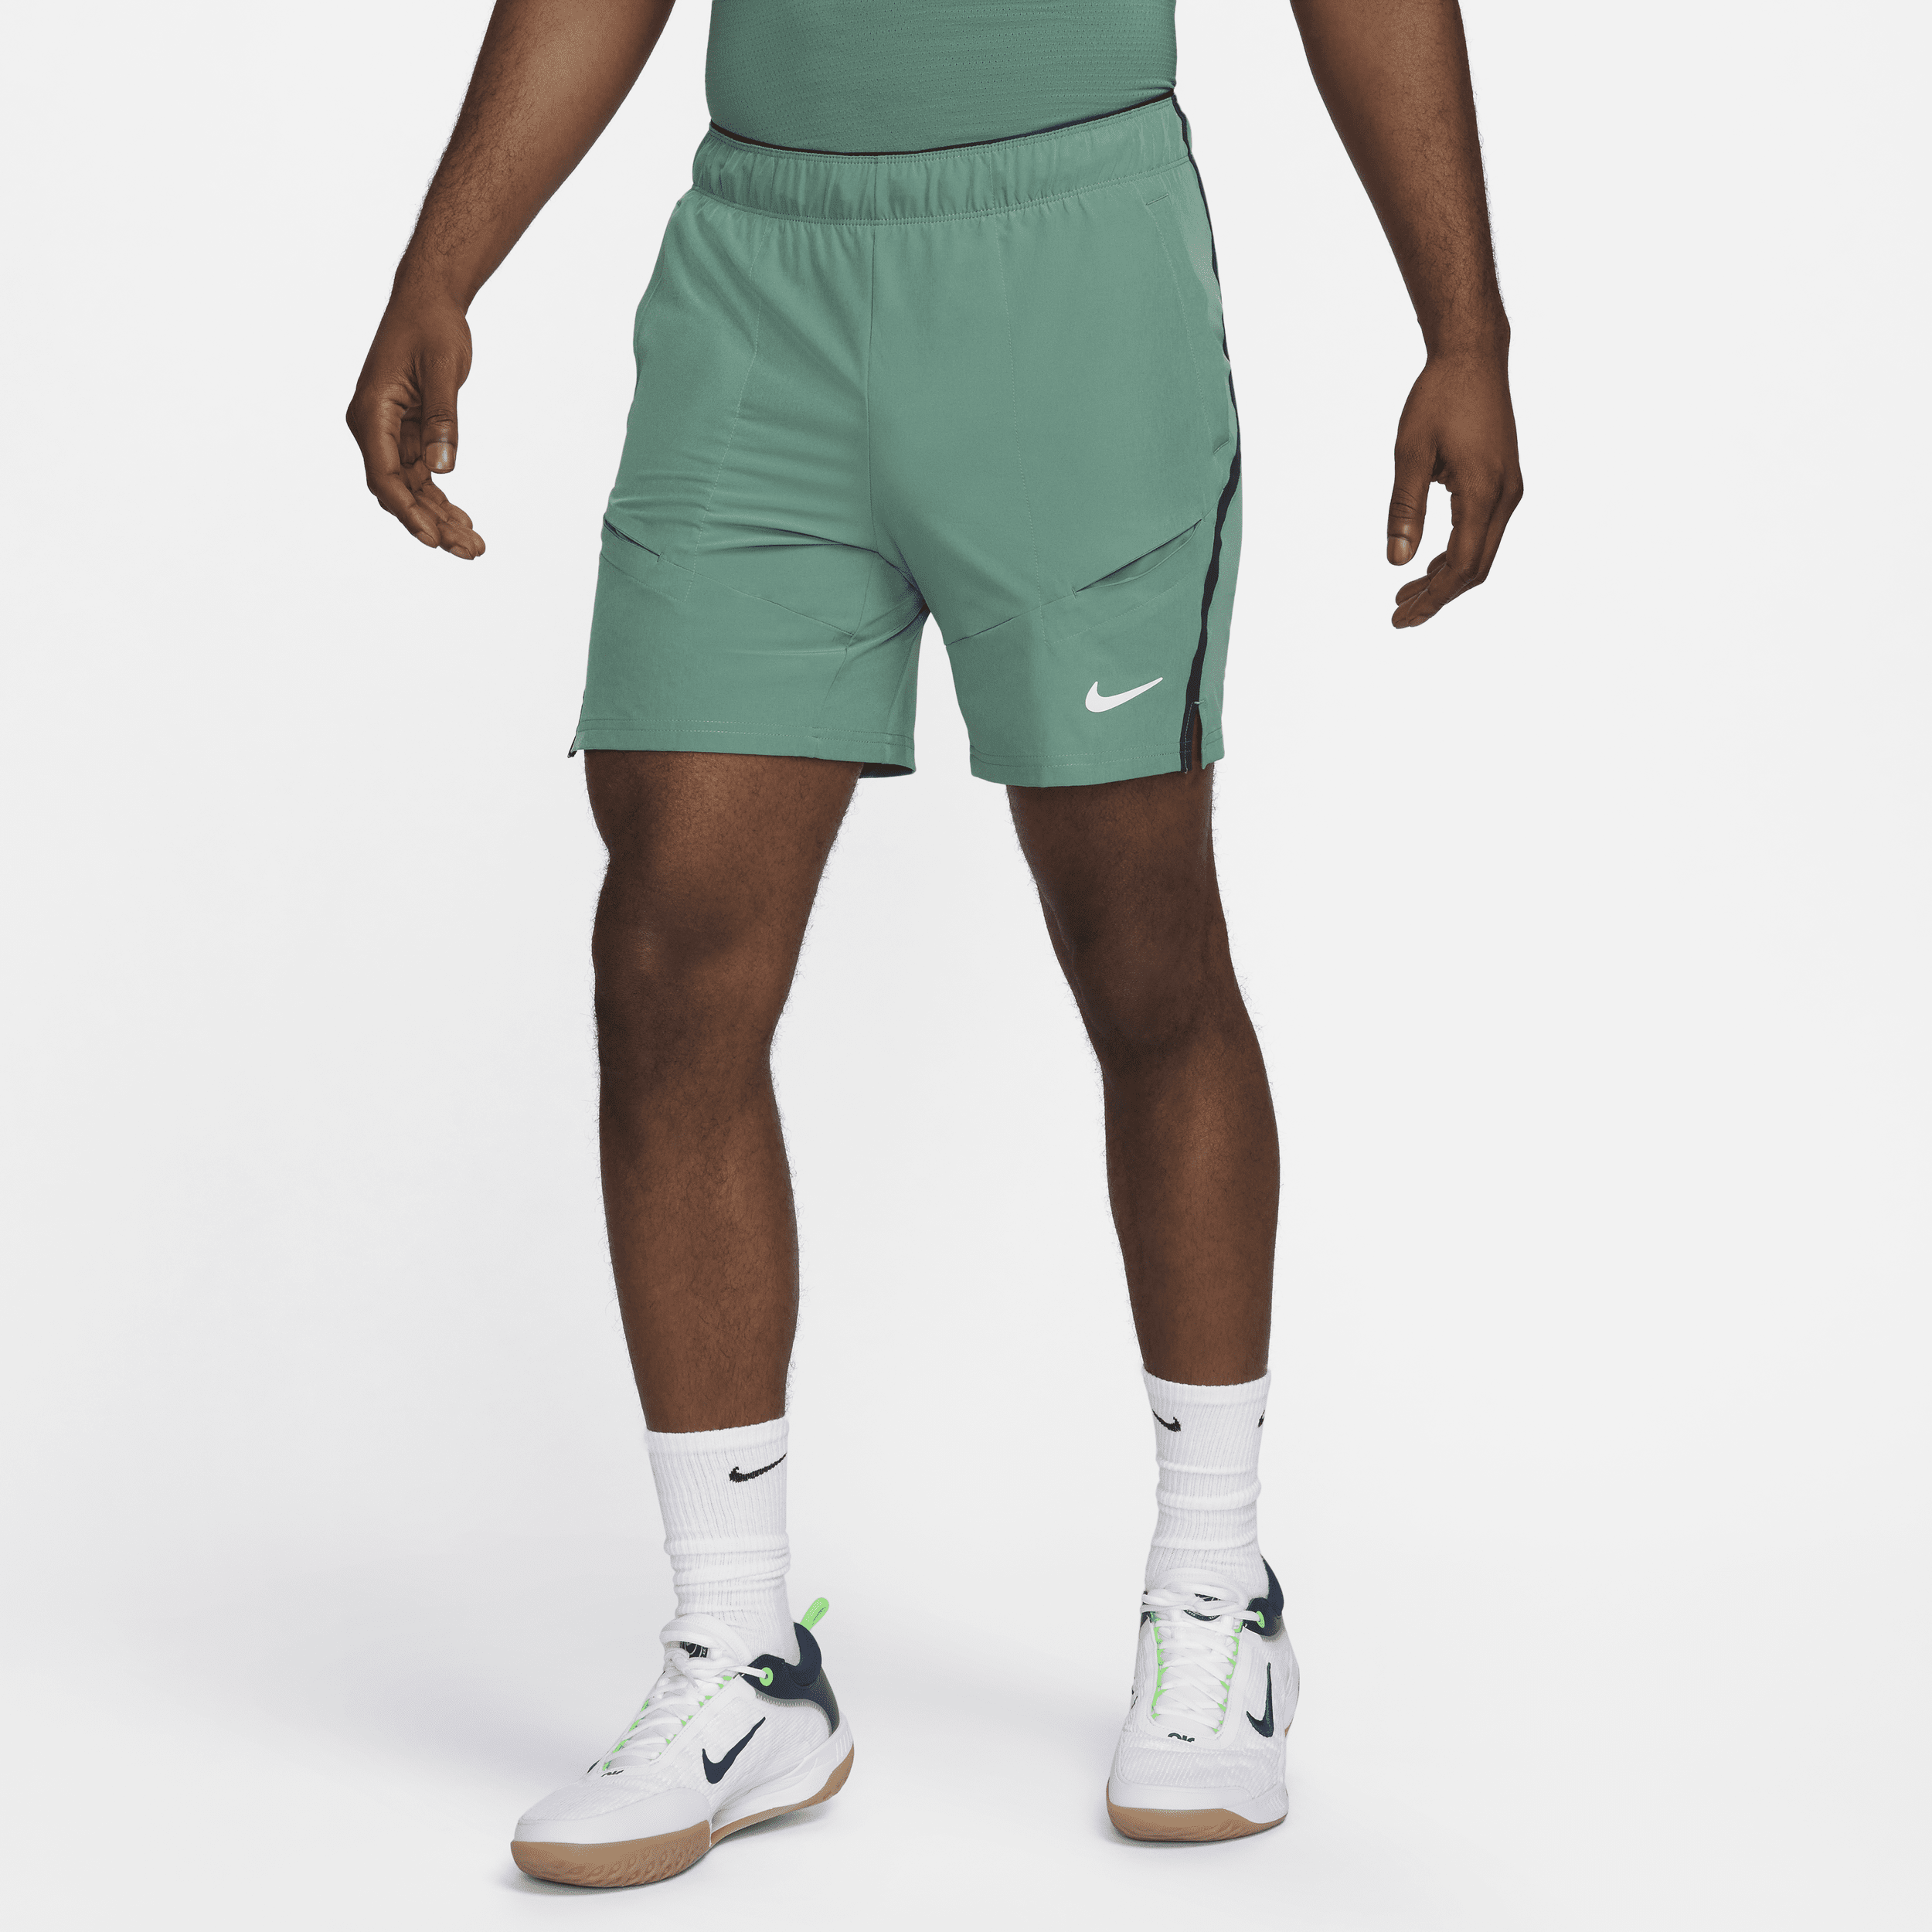 NikeCourt Advantage Dri-FIT tennisshorts voor heren (18 cm) - Groen